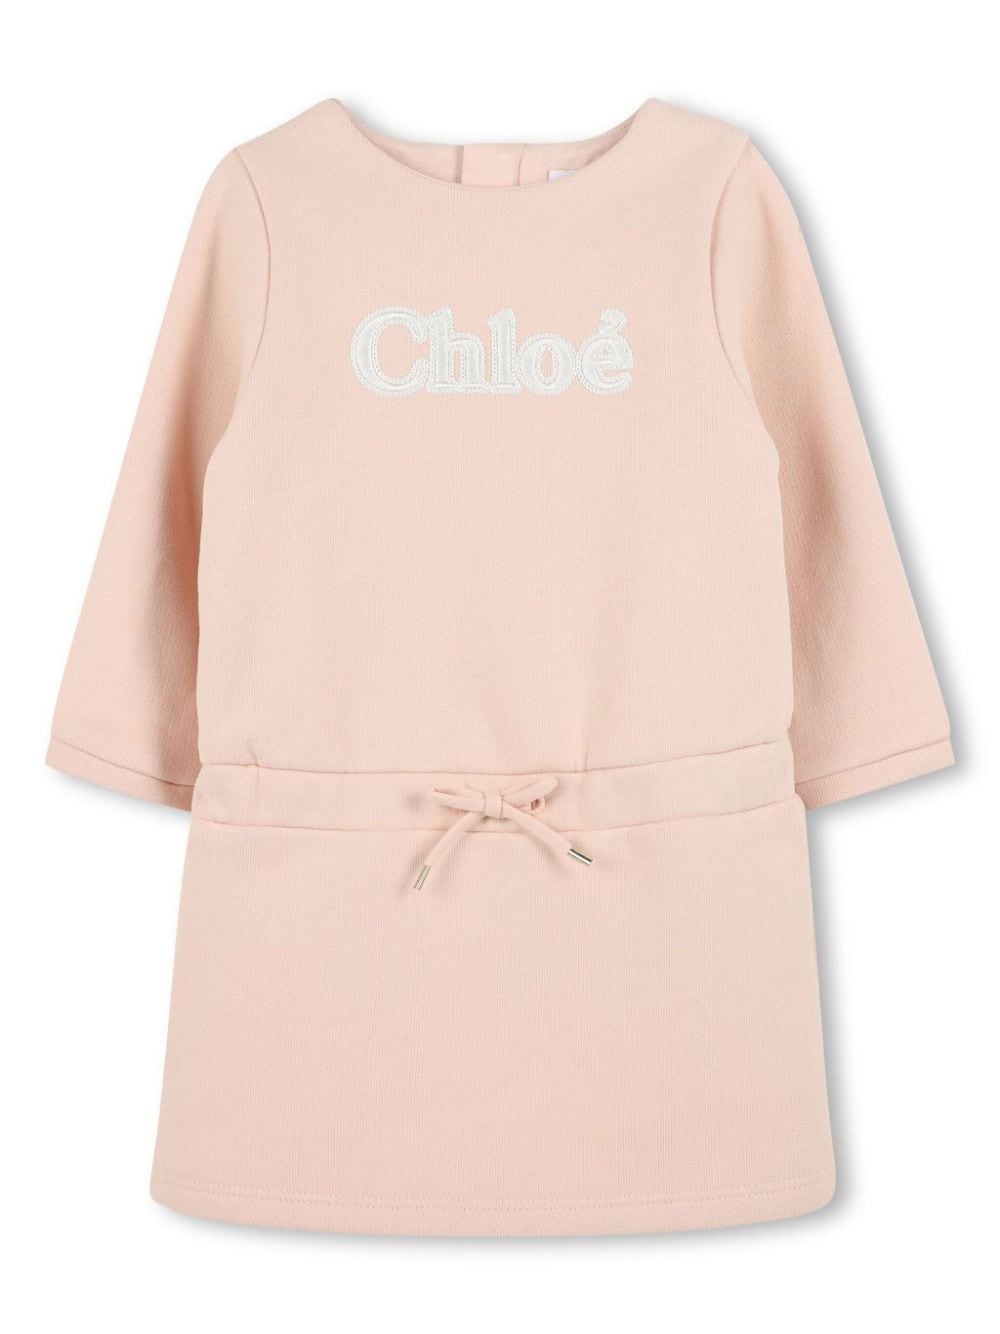 Chloé Kids logo-appliquéd dress - Pink von Chloé Kids